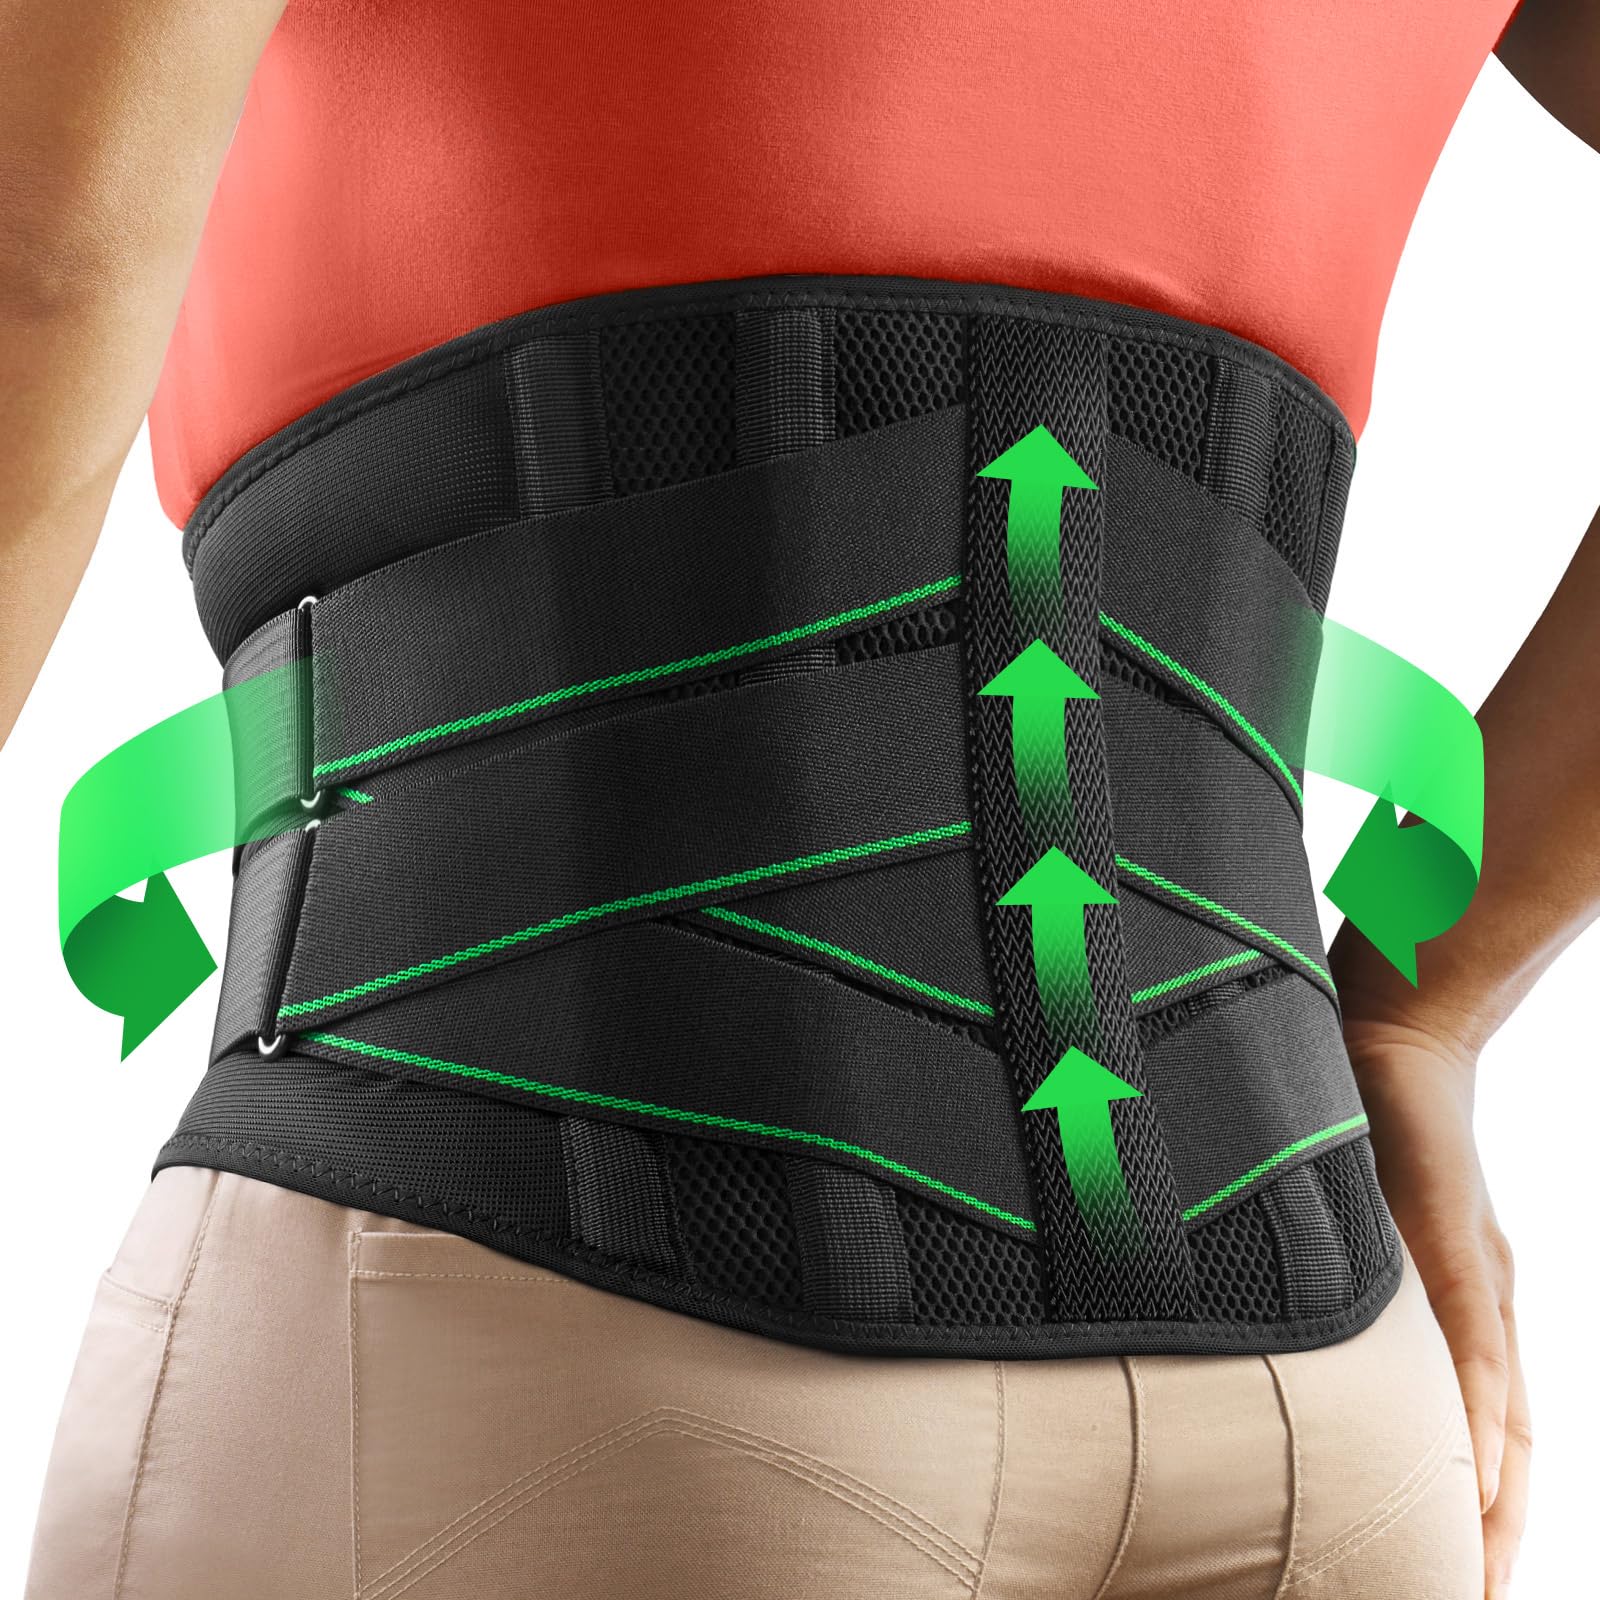 Metal Back Braces, Back Braces for Lower Back Pain, Back Support